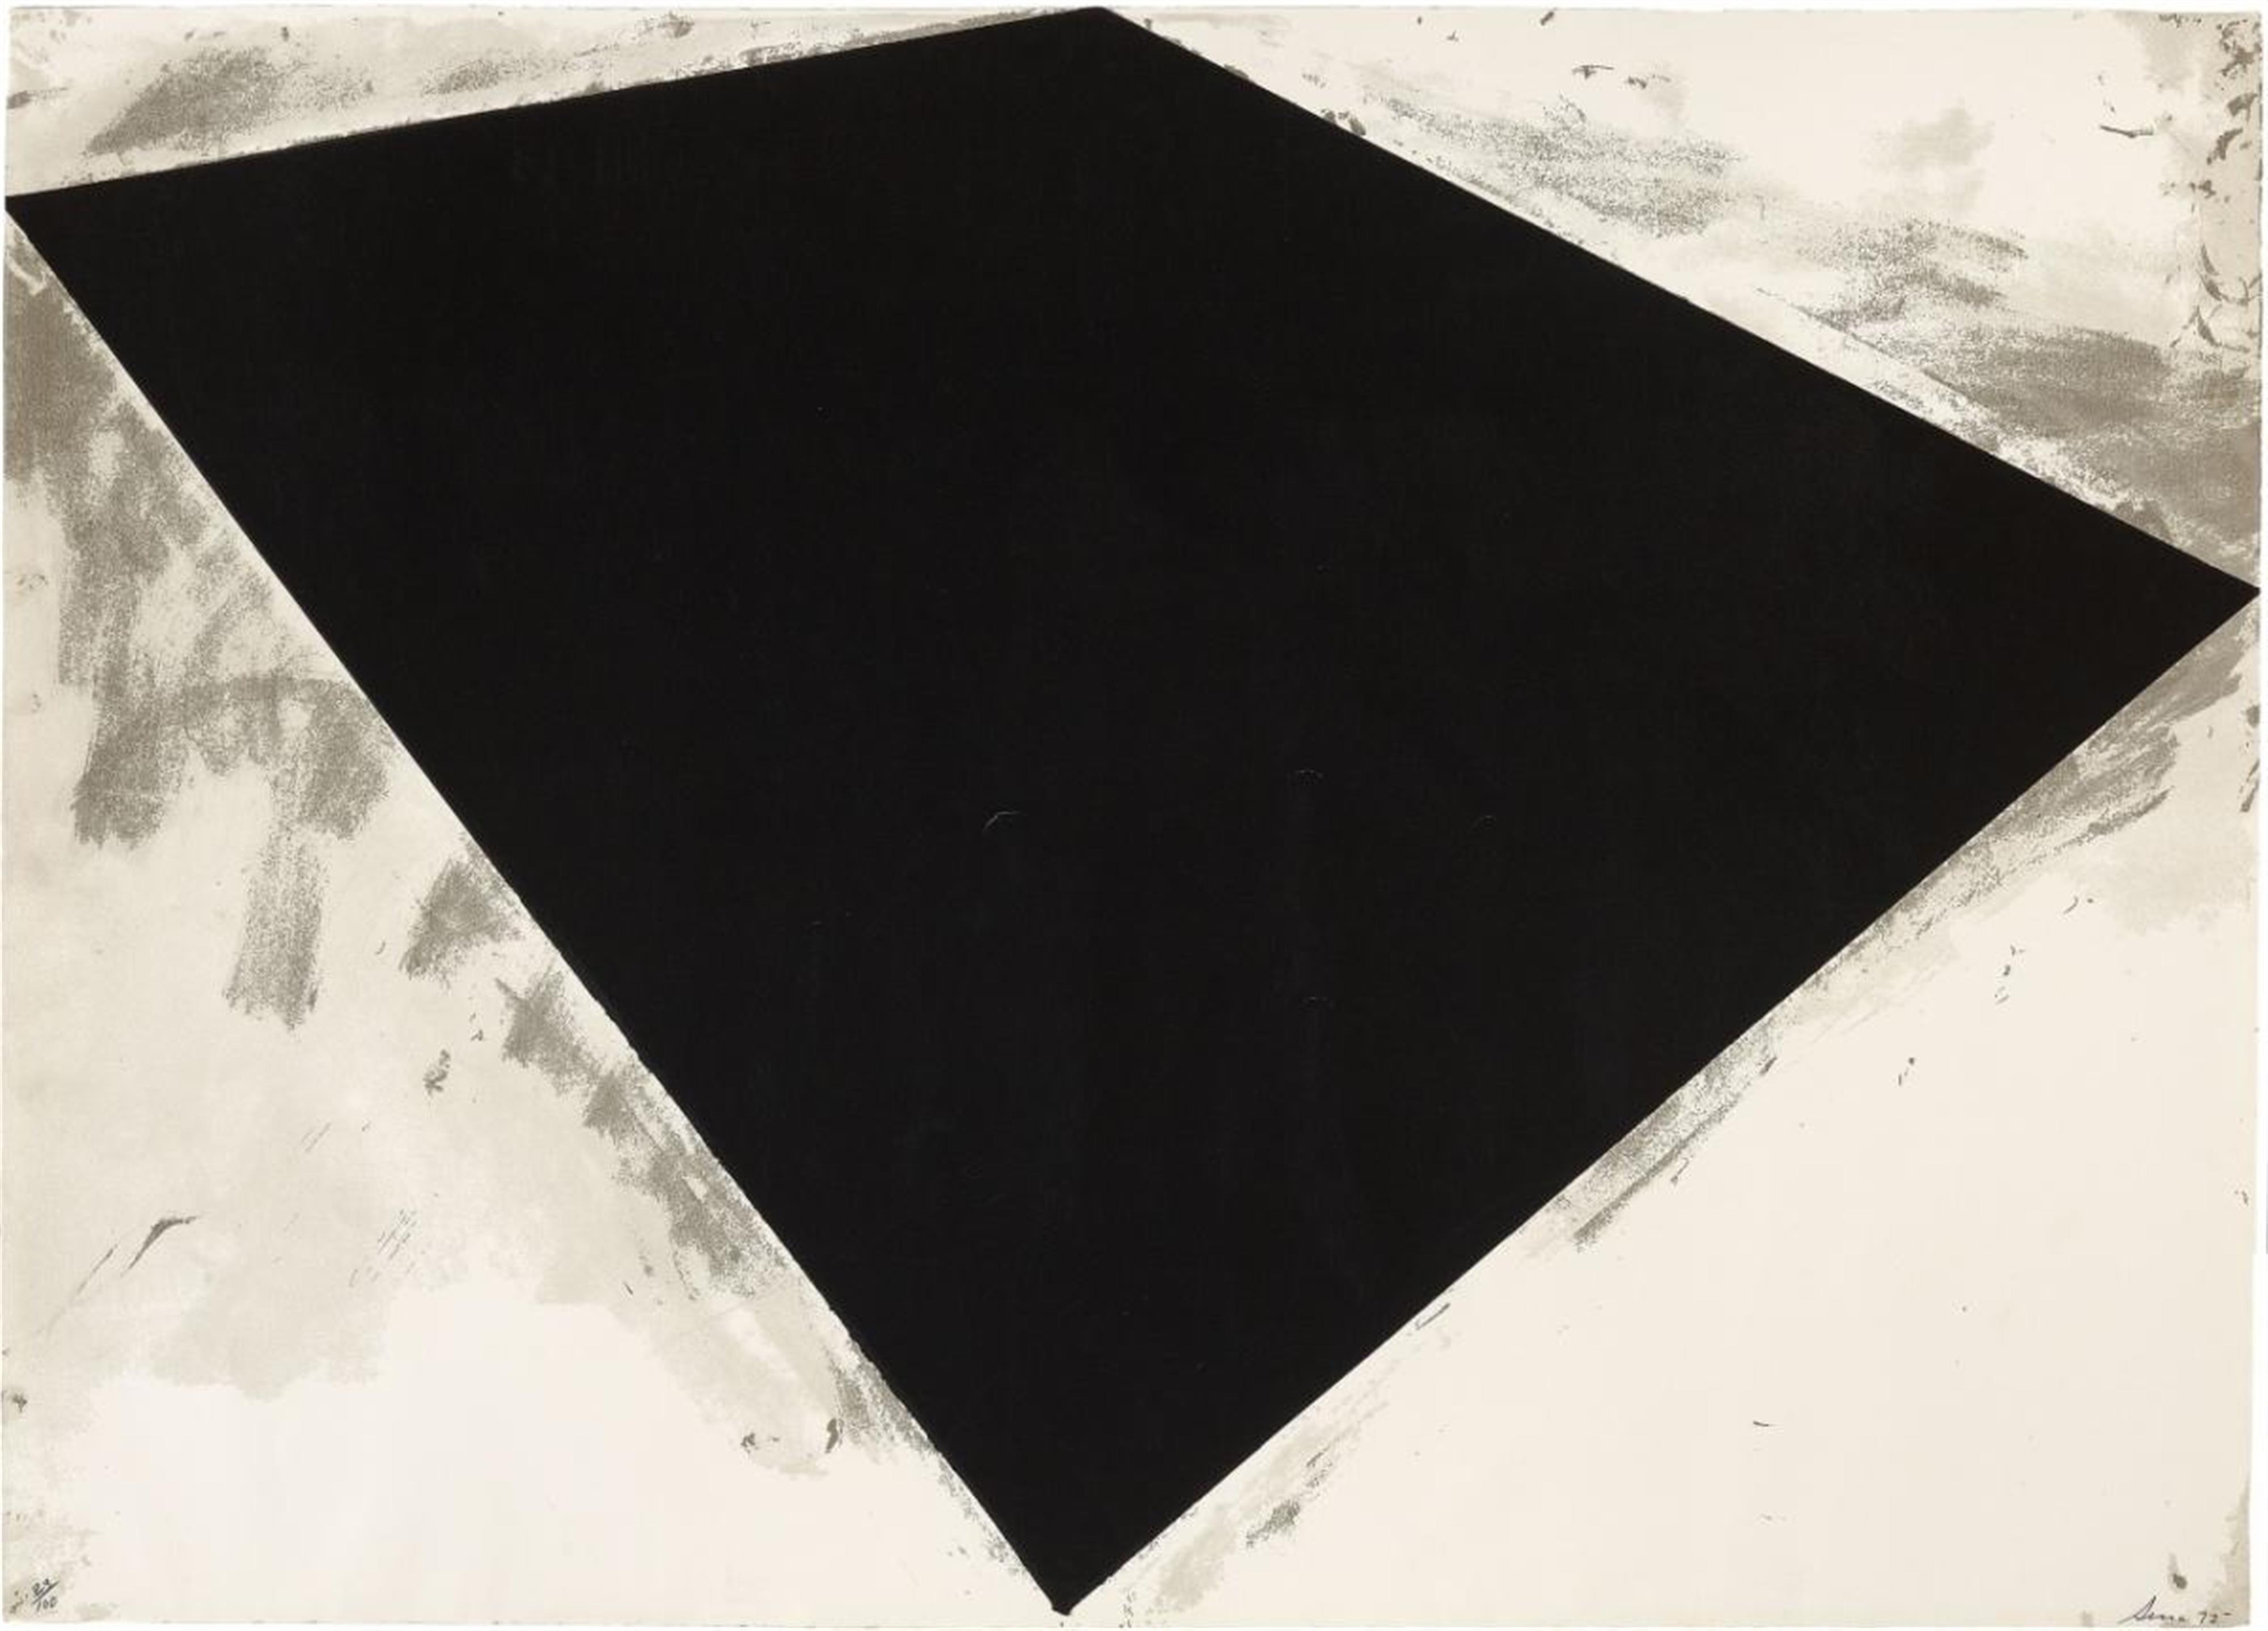 Richard Serra - Untitled (Philip Glass Poster) - image-1